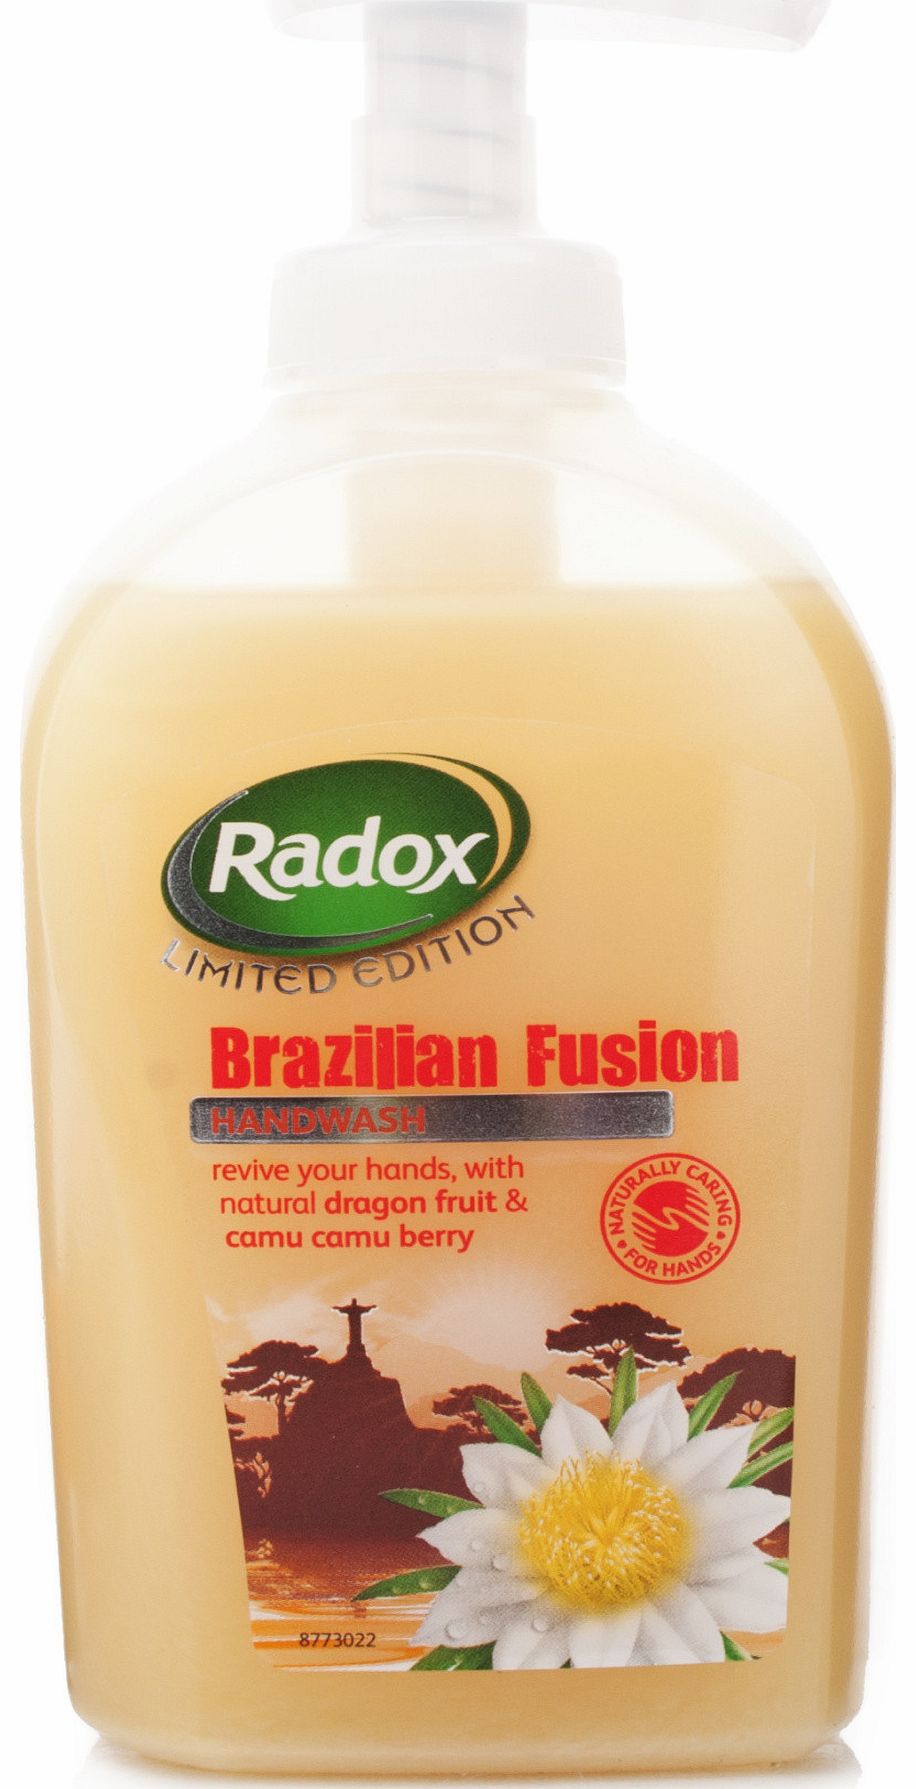 Radox Brazilian Fusion Limited Edition Handwash